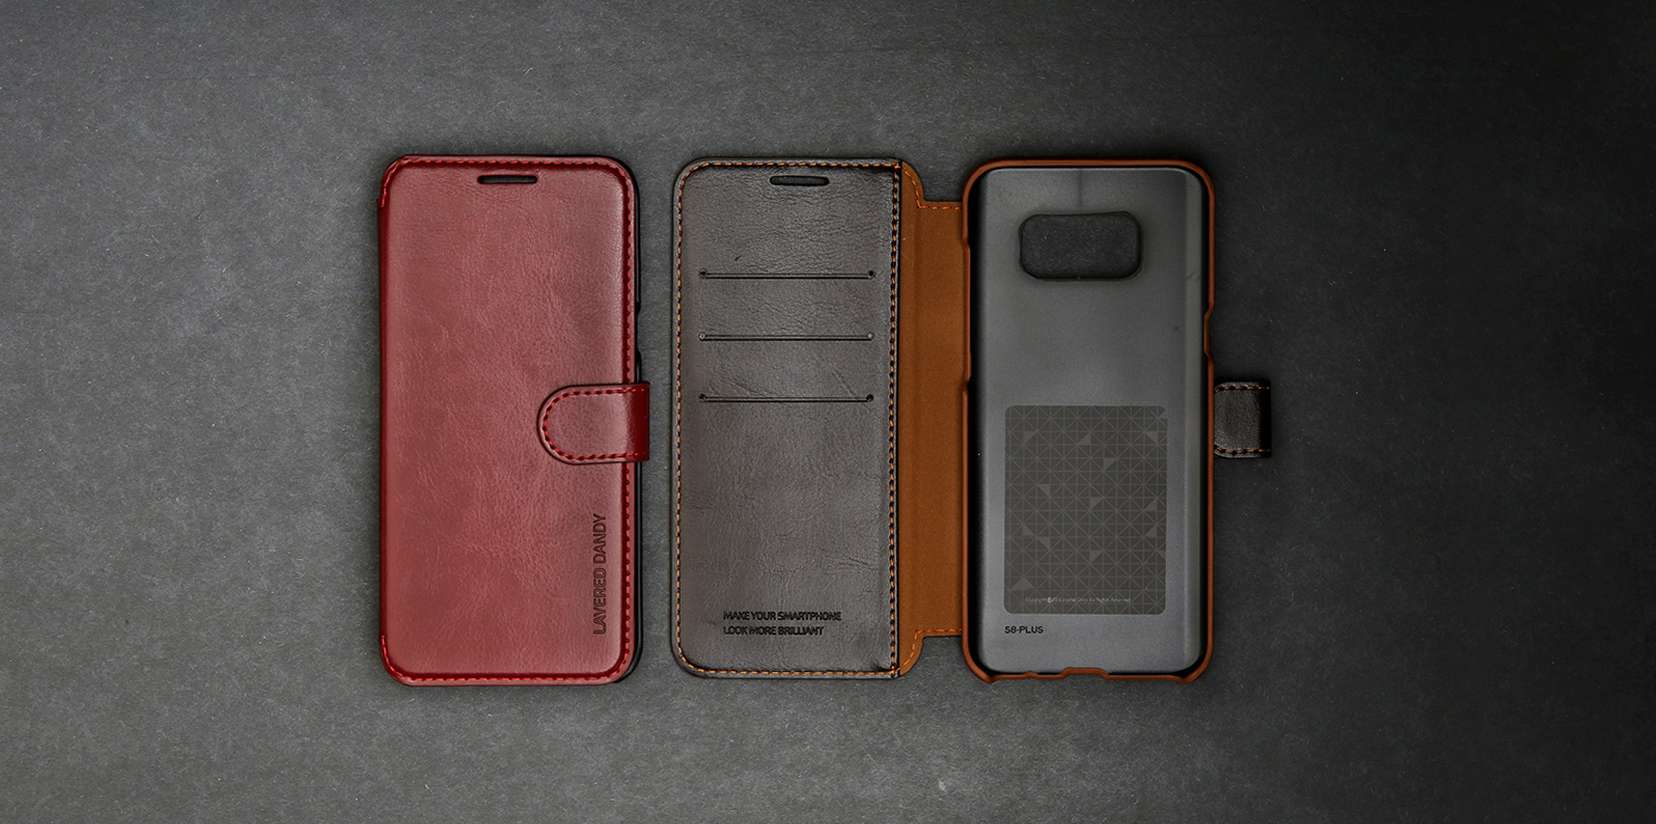 The Best Galaxy S8 Plus Case Series | VRS Design